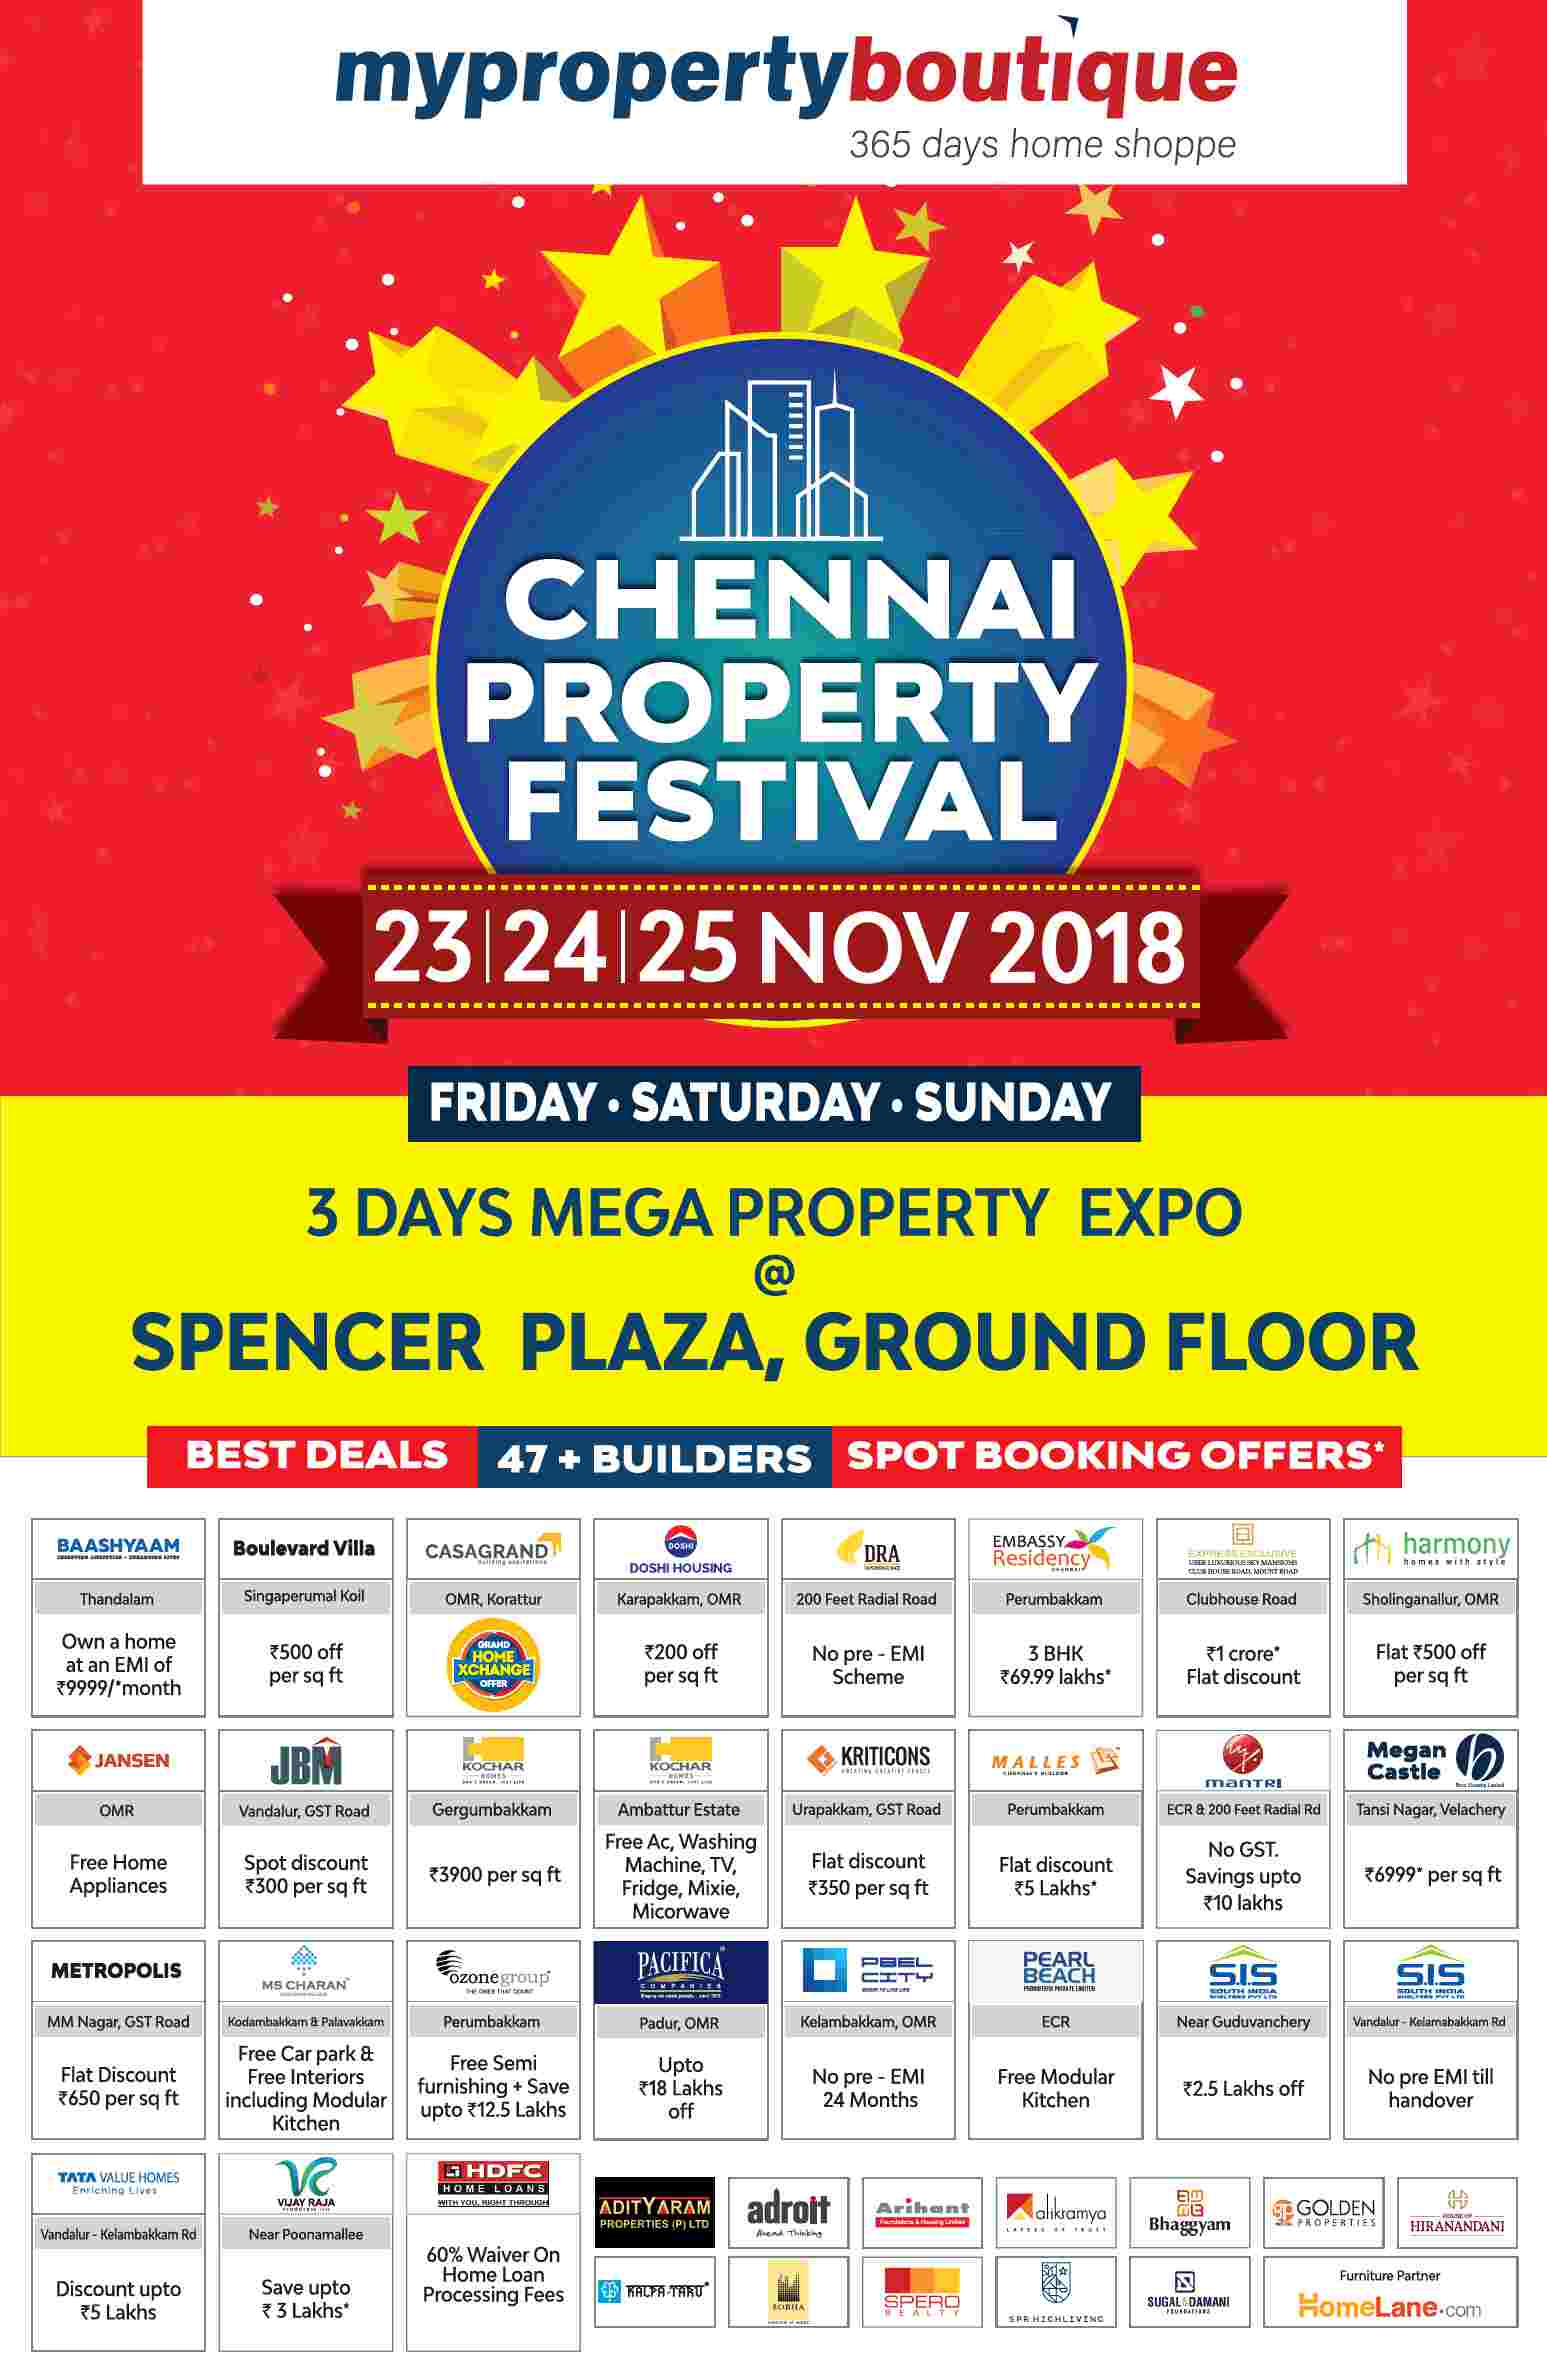 Presenting Chennai Property Festival 2018 Update